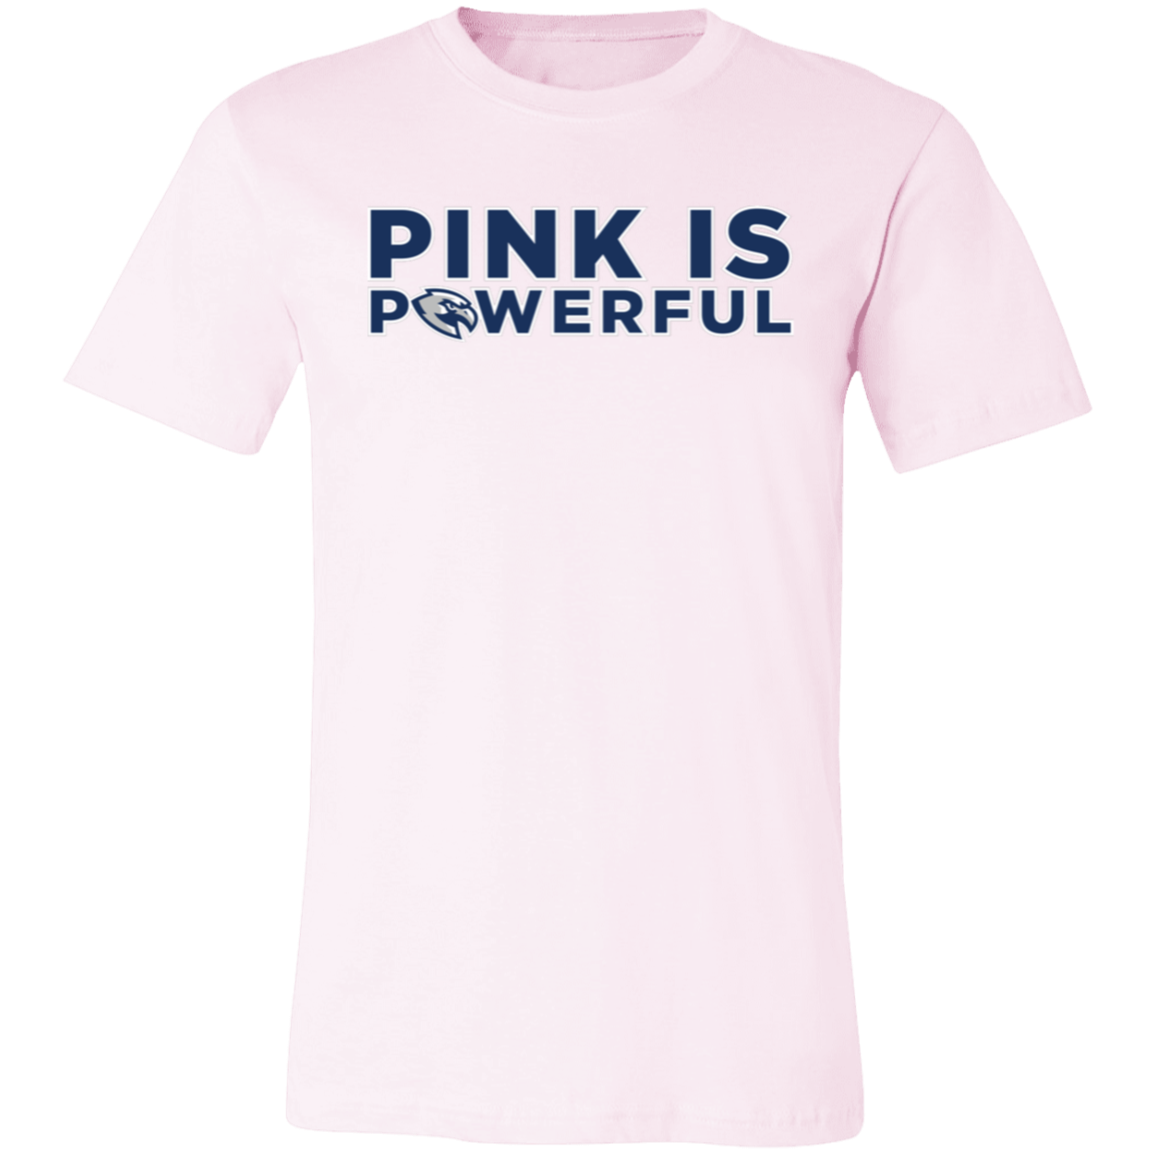 Pink is Powerful Tee